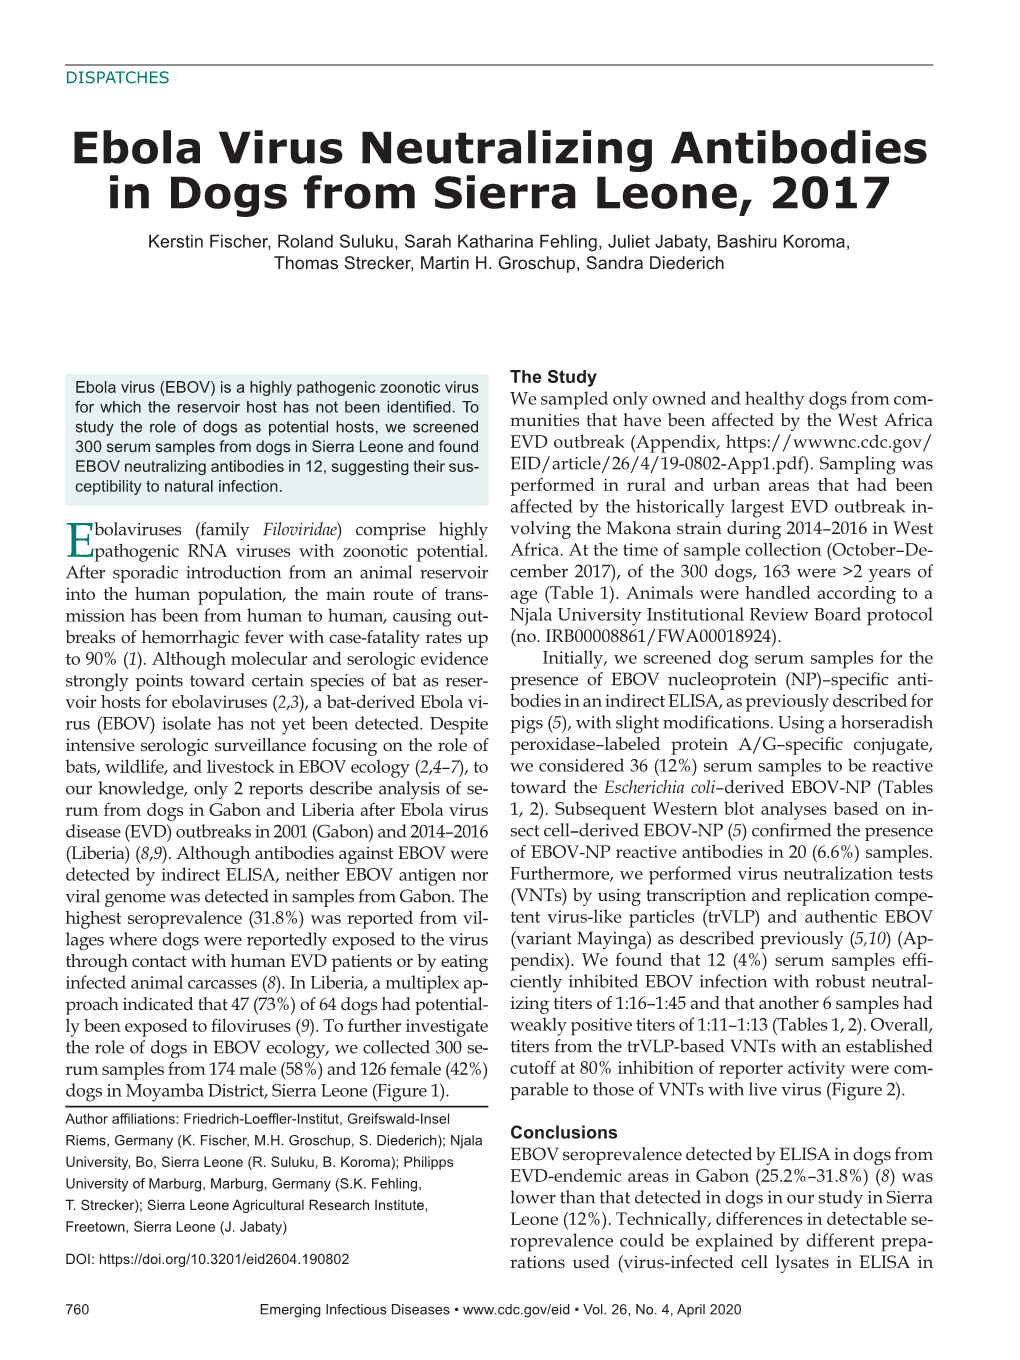 Ebola Virus Neutralizing Antibodies in Dogs from Sierra Leone, 2017